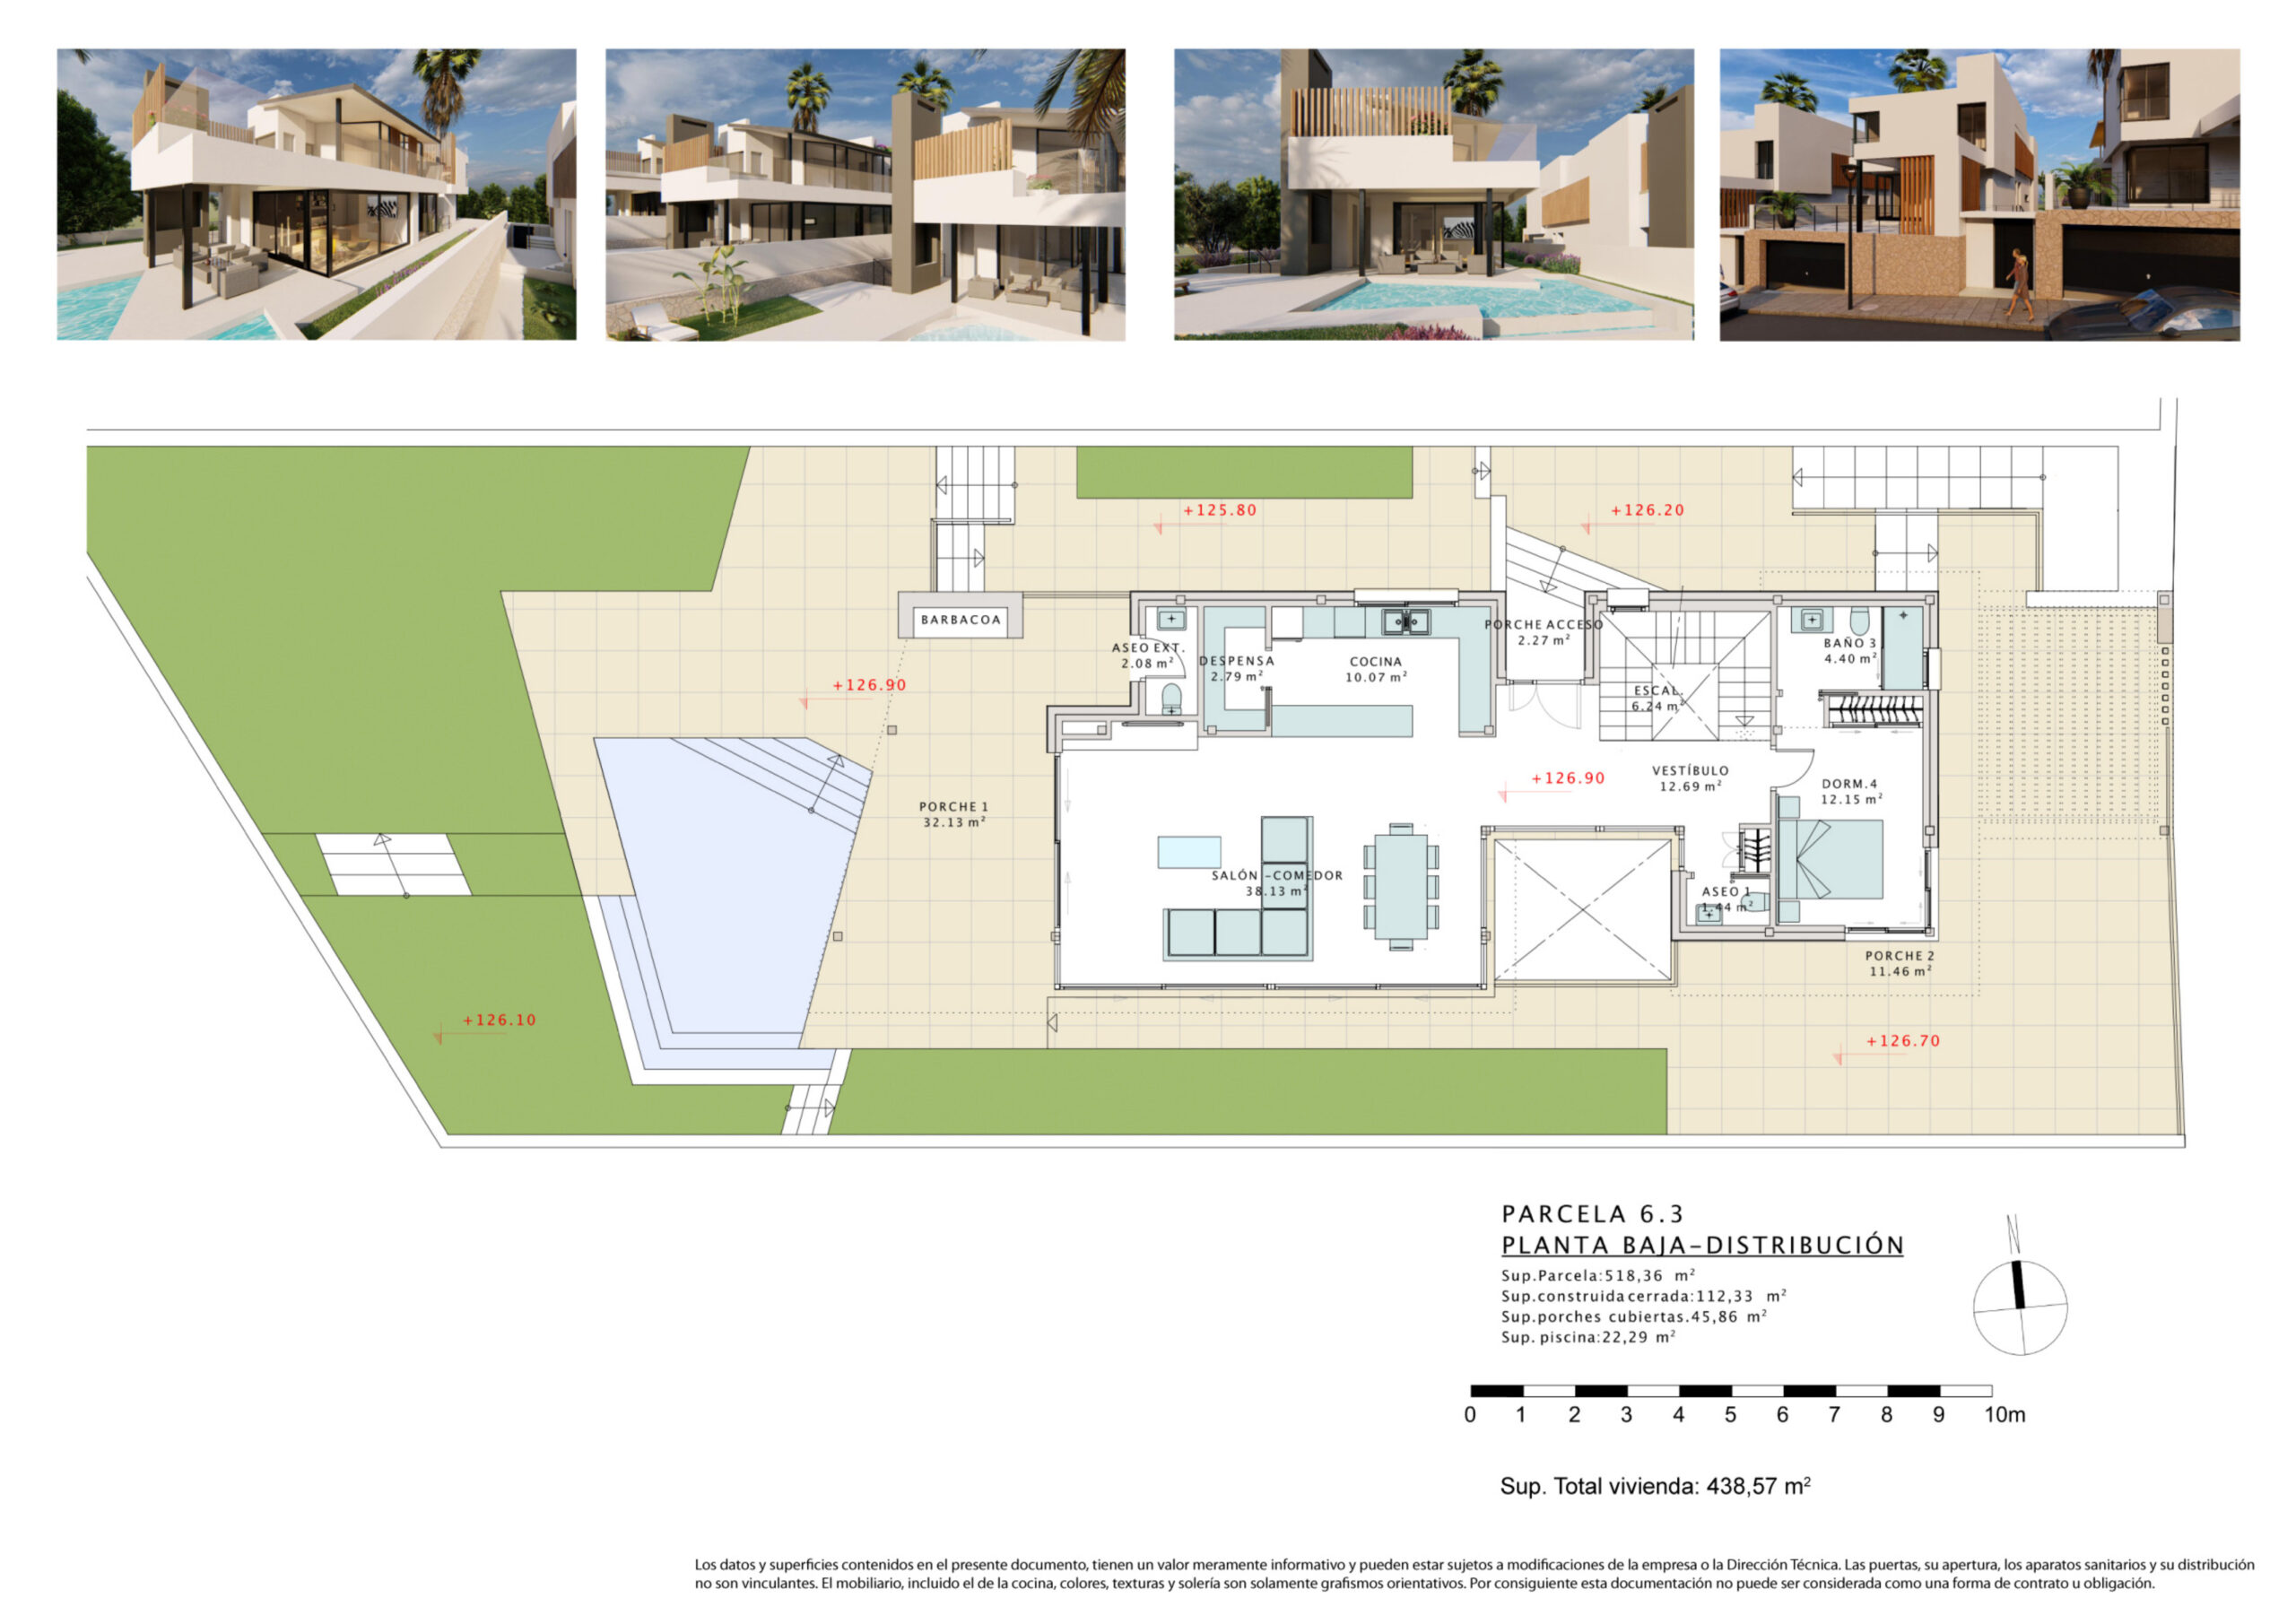 5 bedroom villa for sale in el higueron floor plans